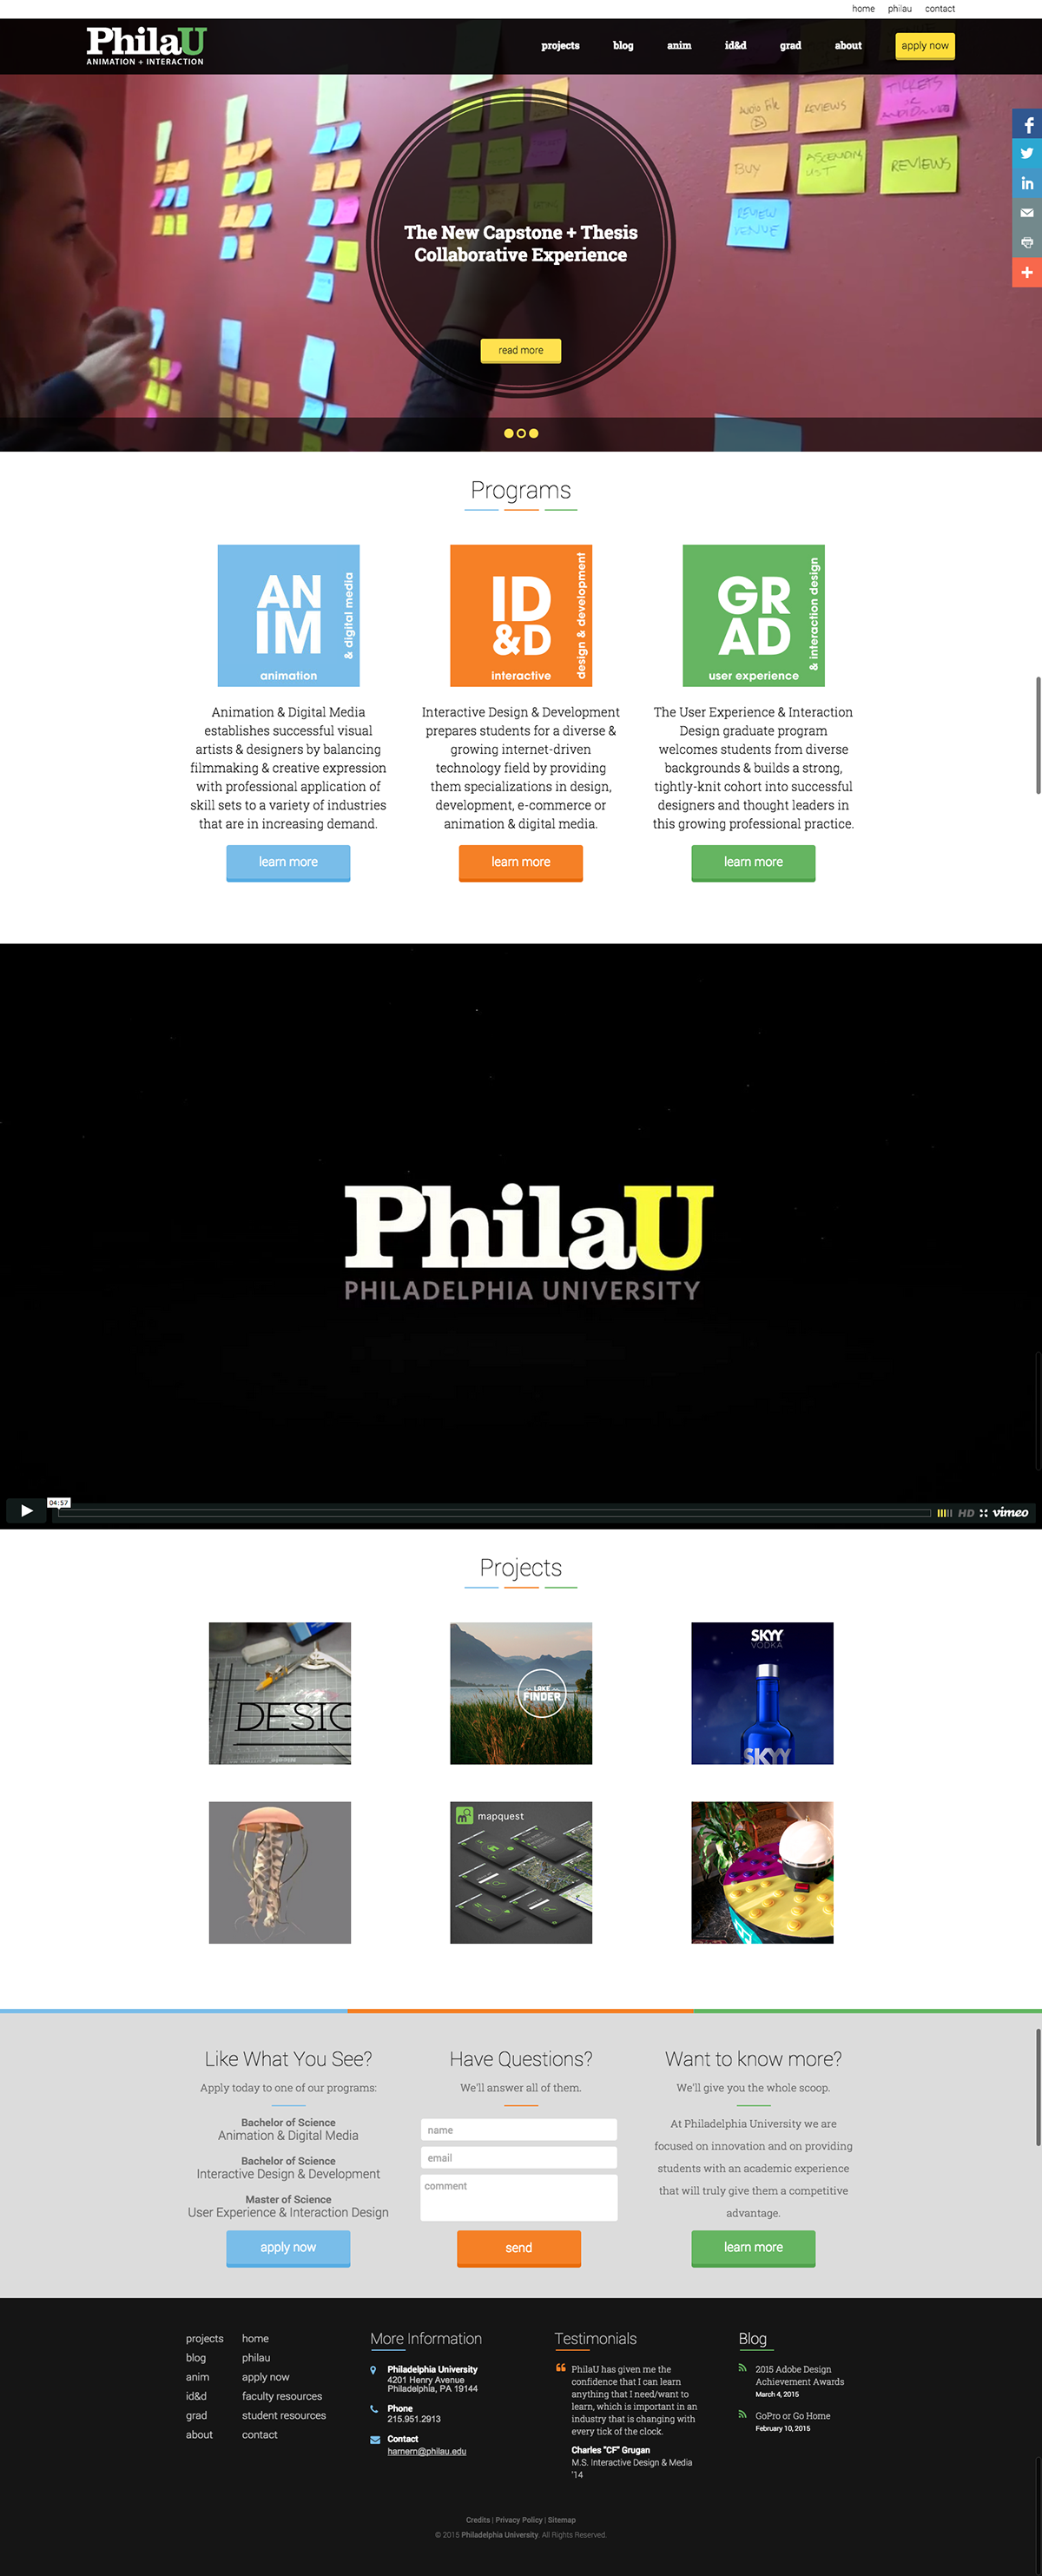 PhilaU interactive design UX design background video